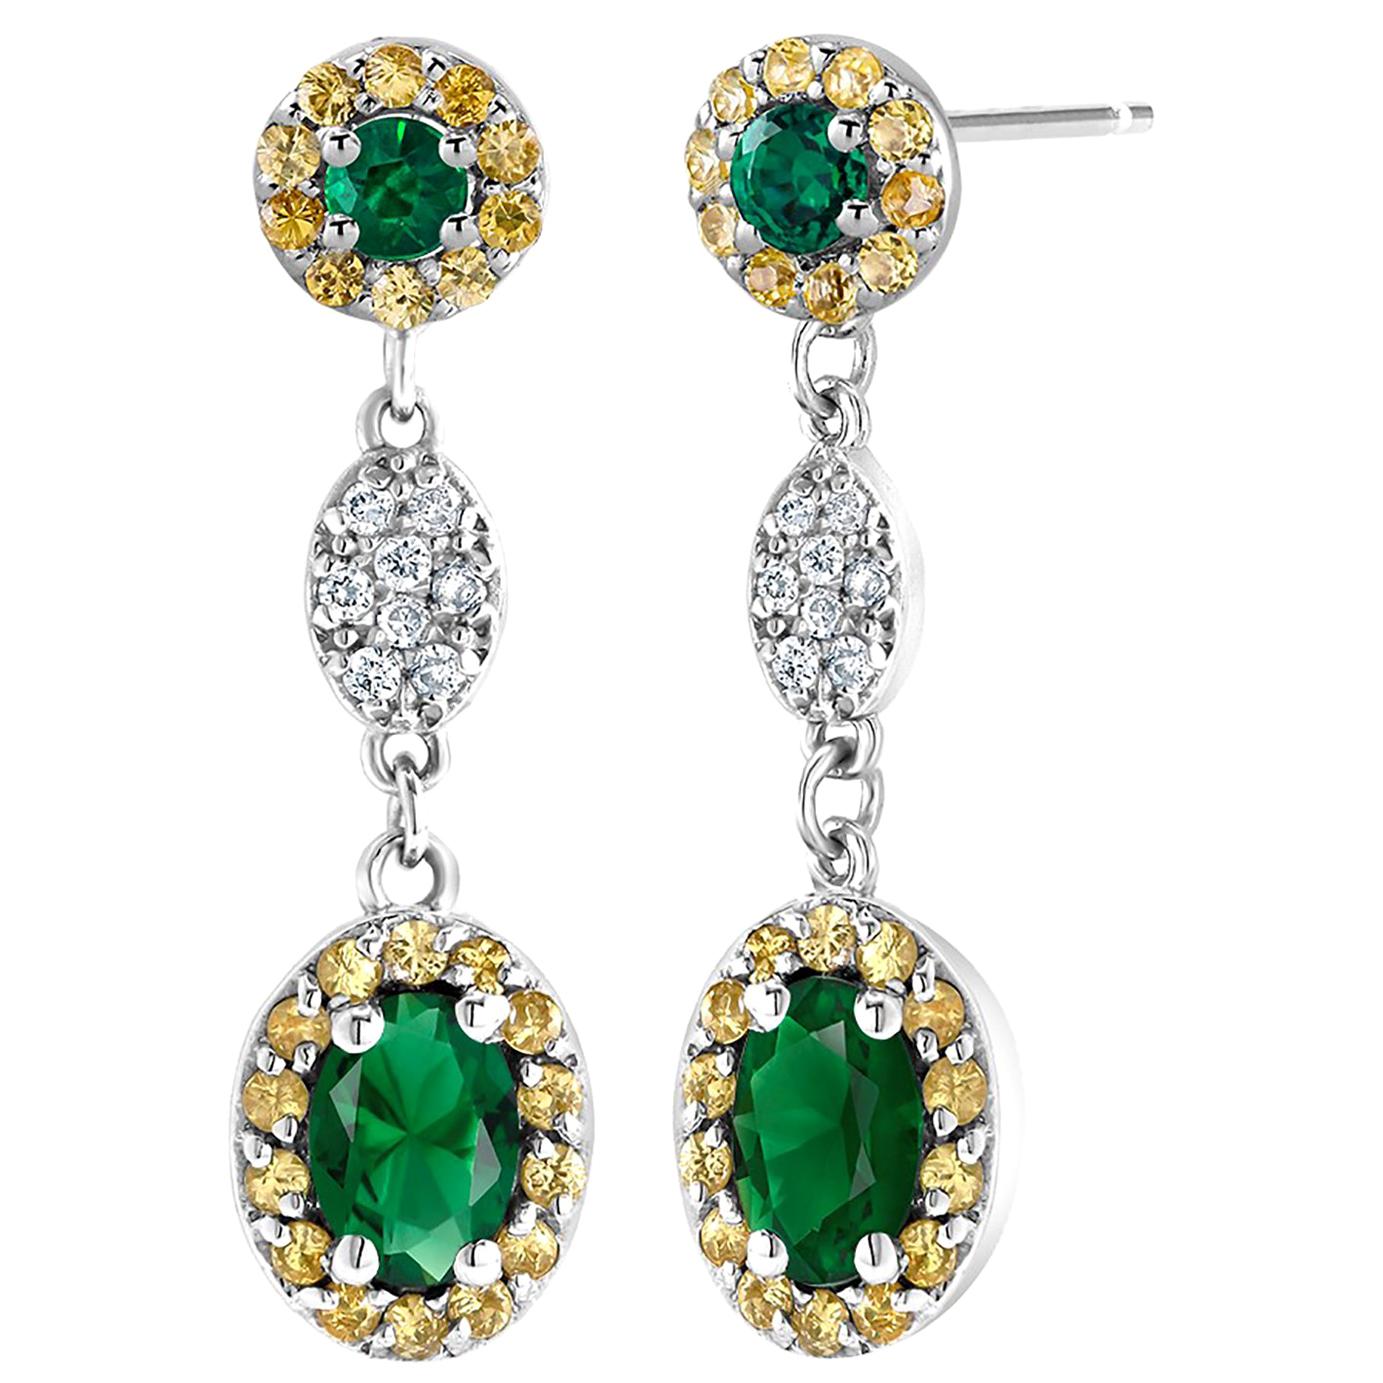 Oval Emerald and Diamond Drop Earrings One Inch Long